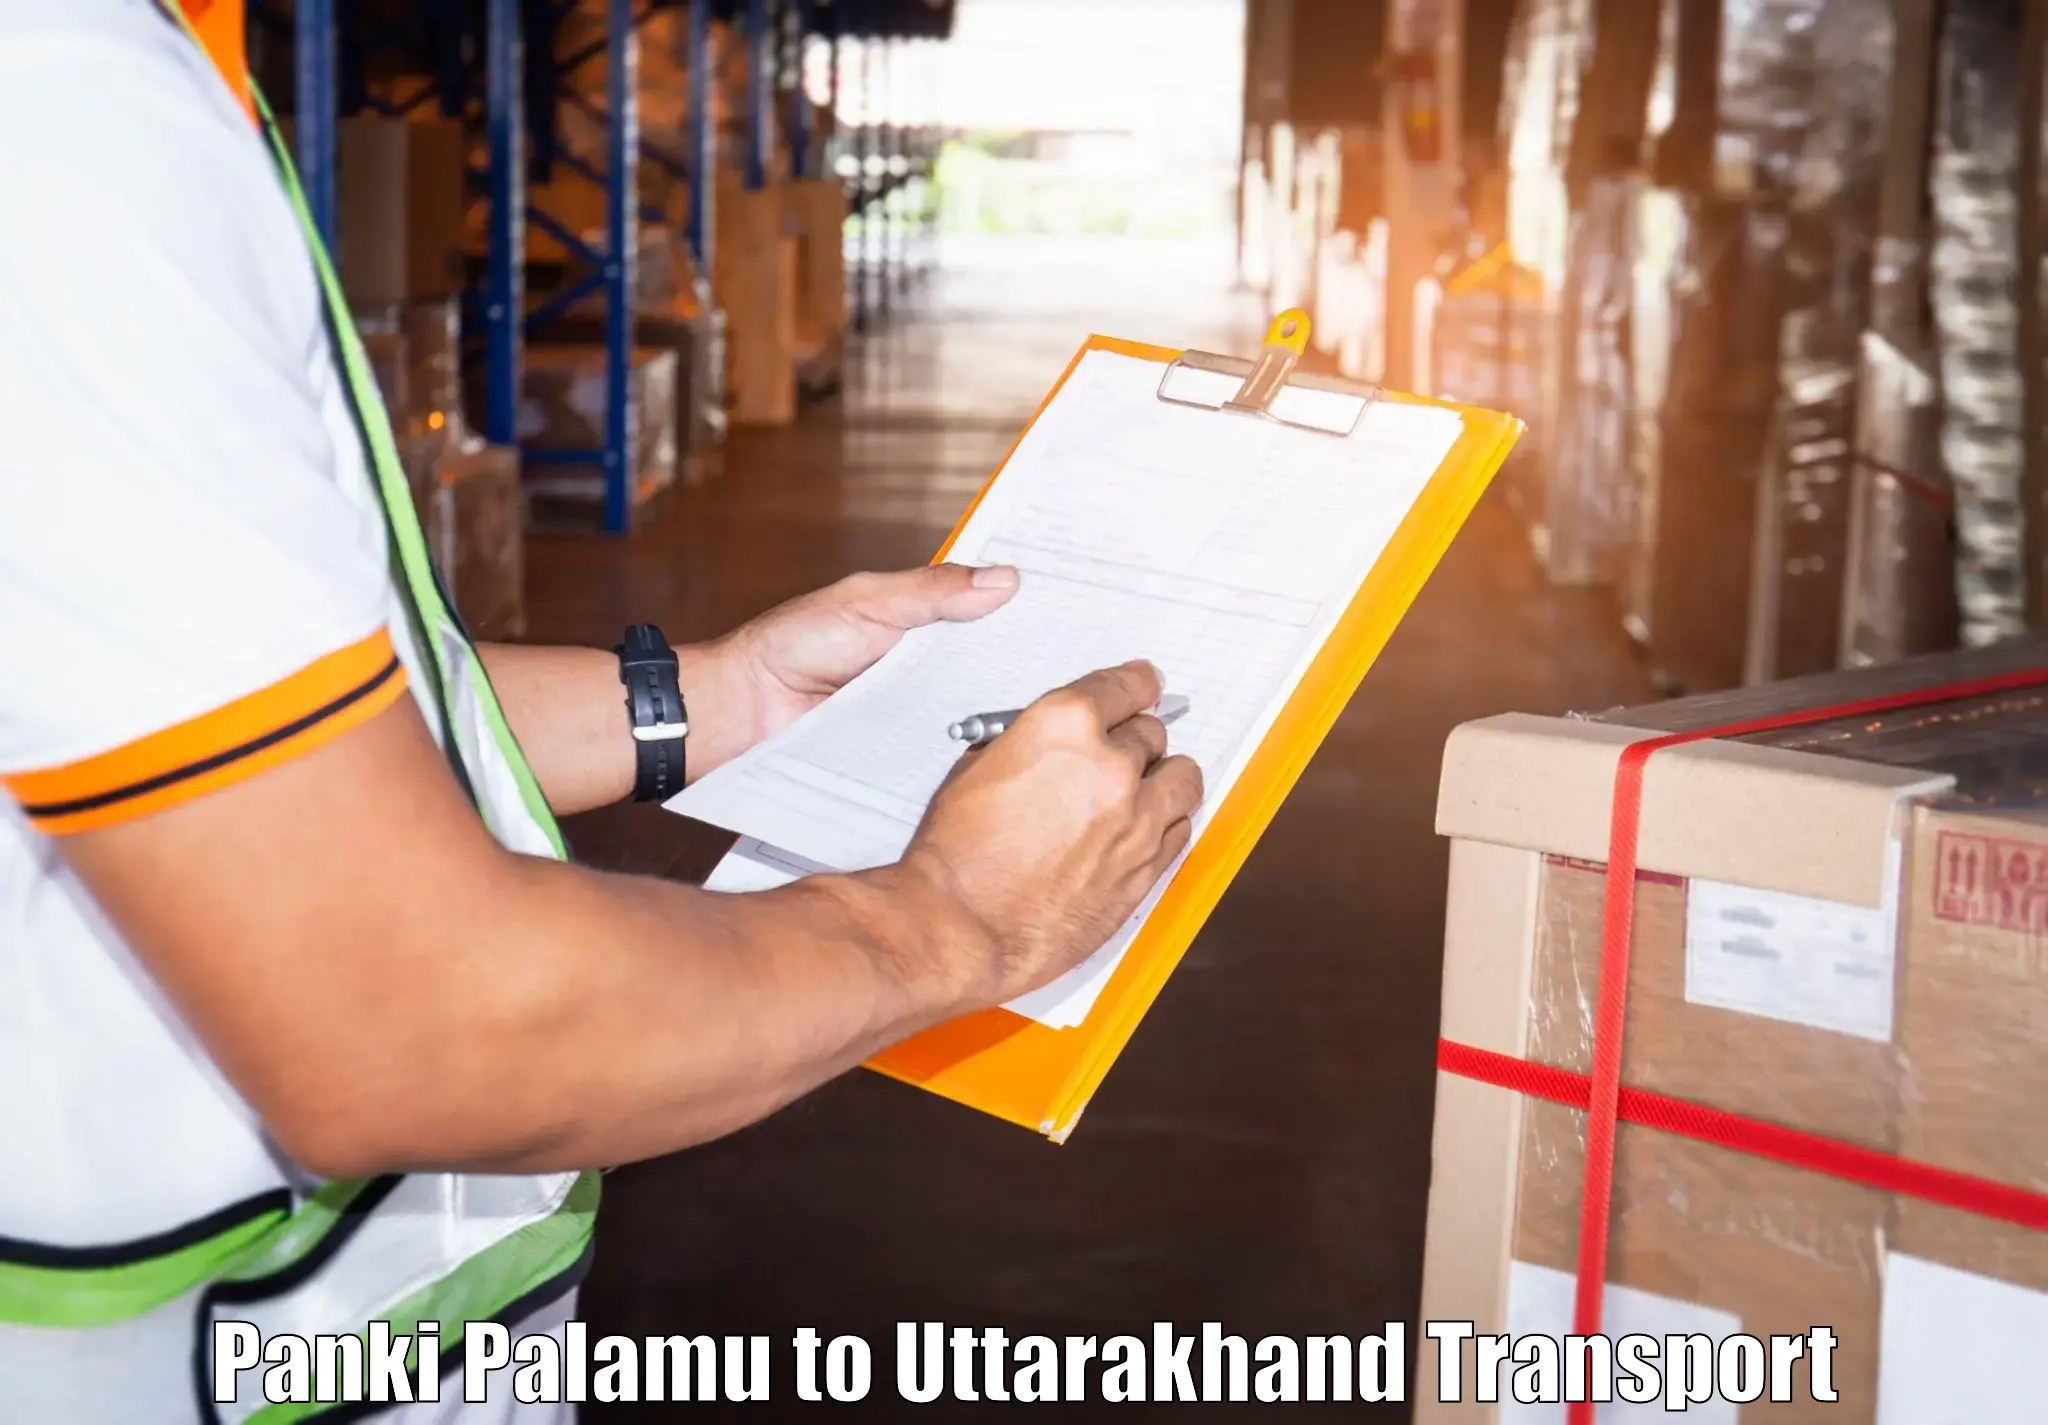 Truck transport companies in India Panki Palamu to Ramnagar